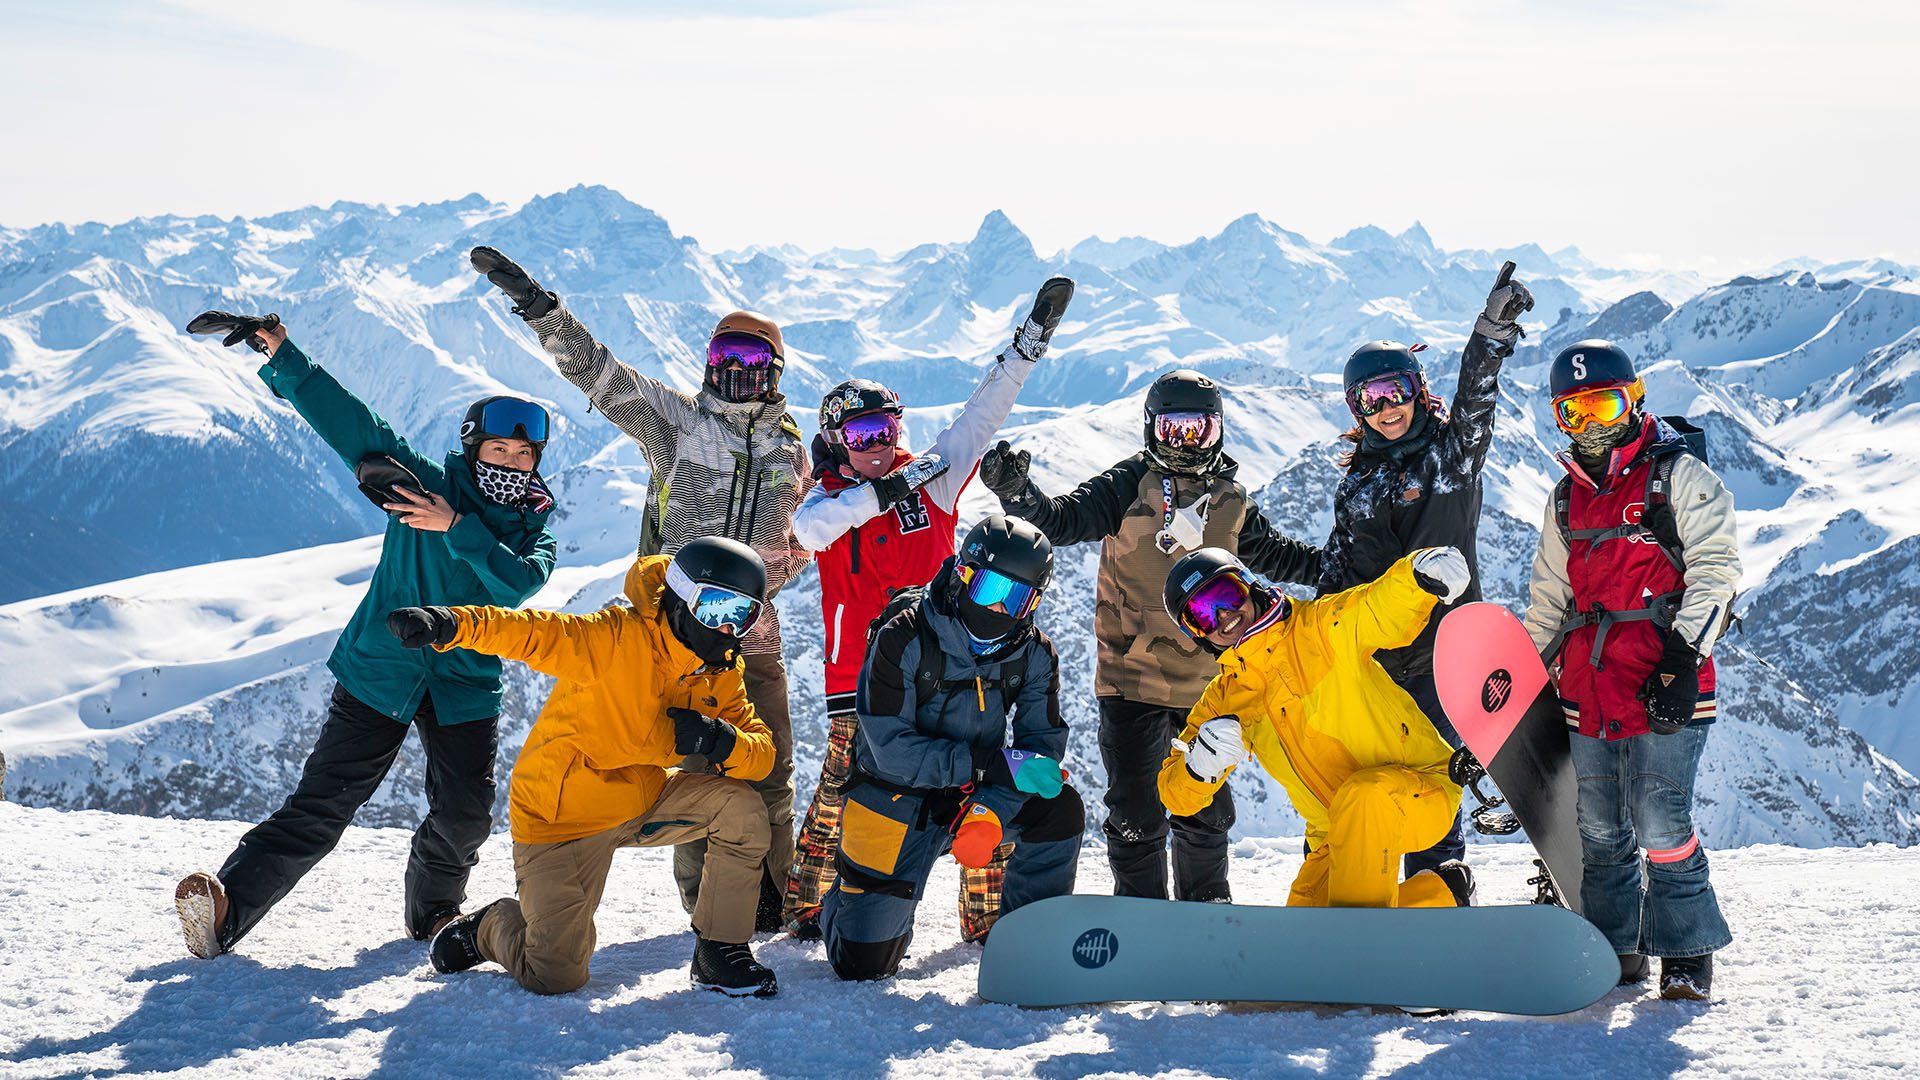 Winter sport enthusiasts at Parsenn ski area in Davos Klosters, image by Frederik Kalbermatten, Switzerland Tourism